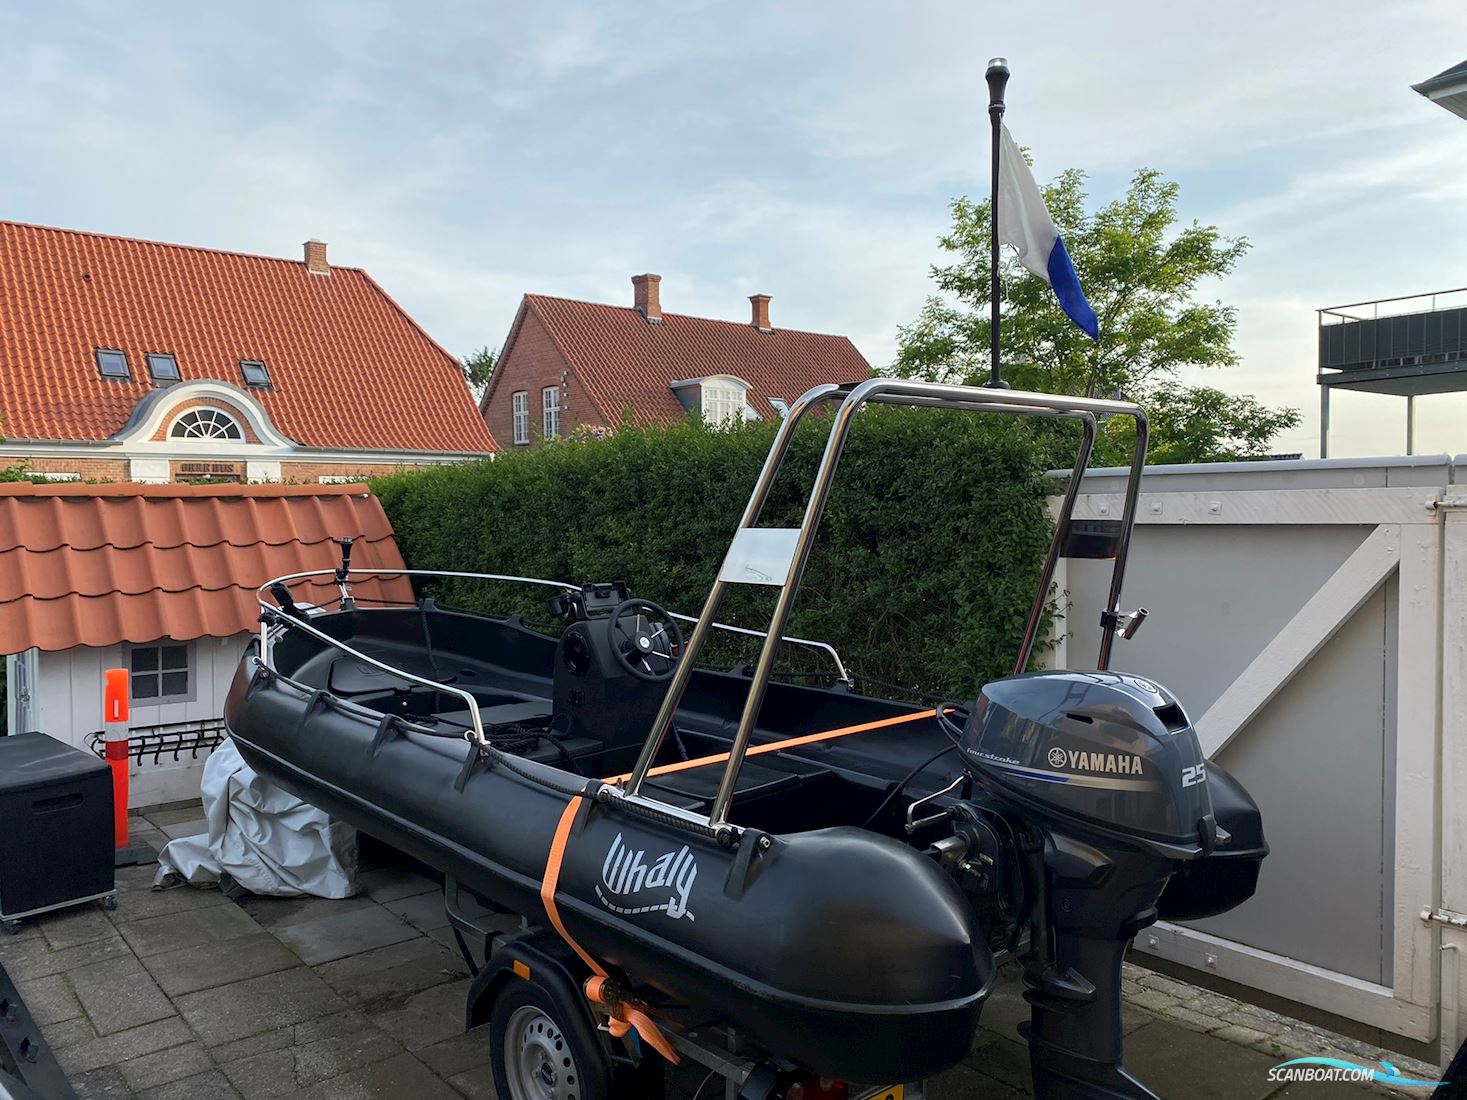 Whaly 435 Power boat 2019, with Yamaha engine, Denmark